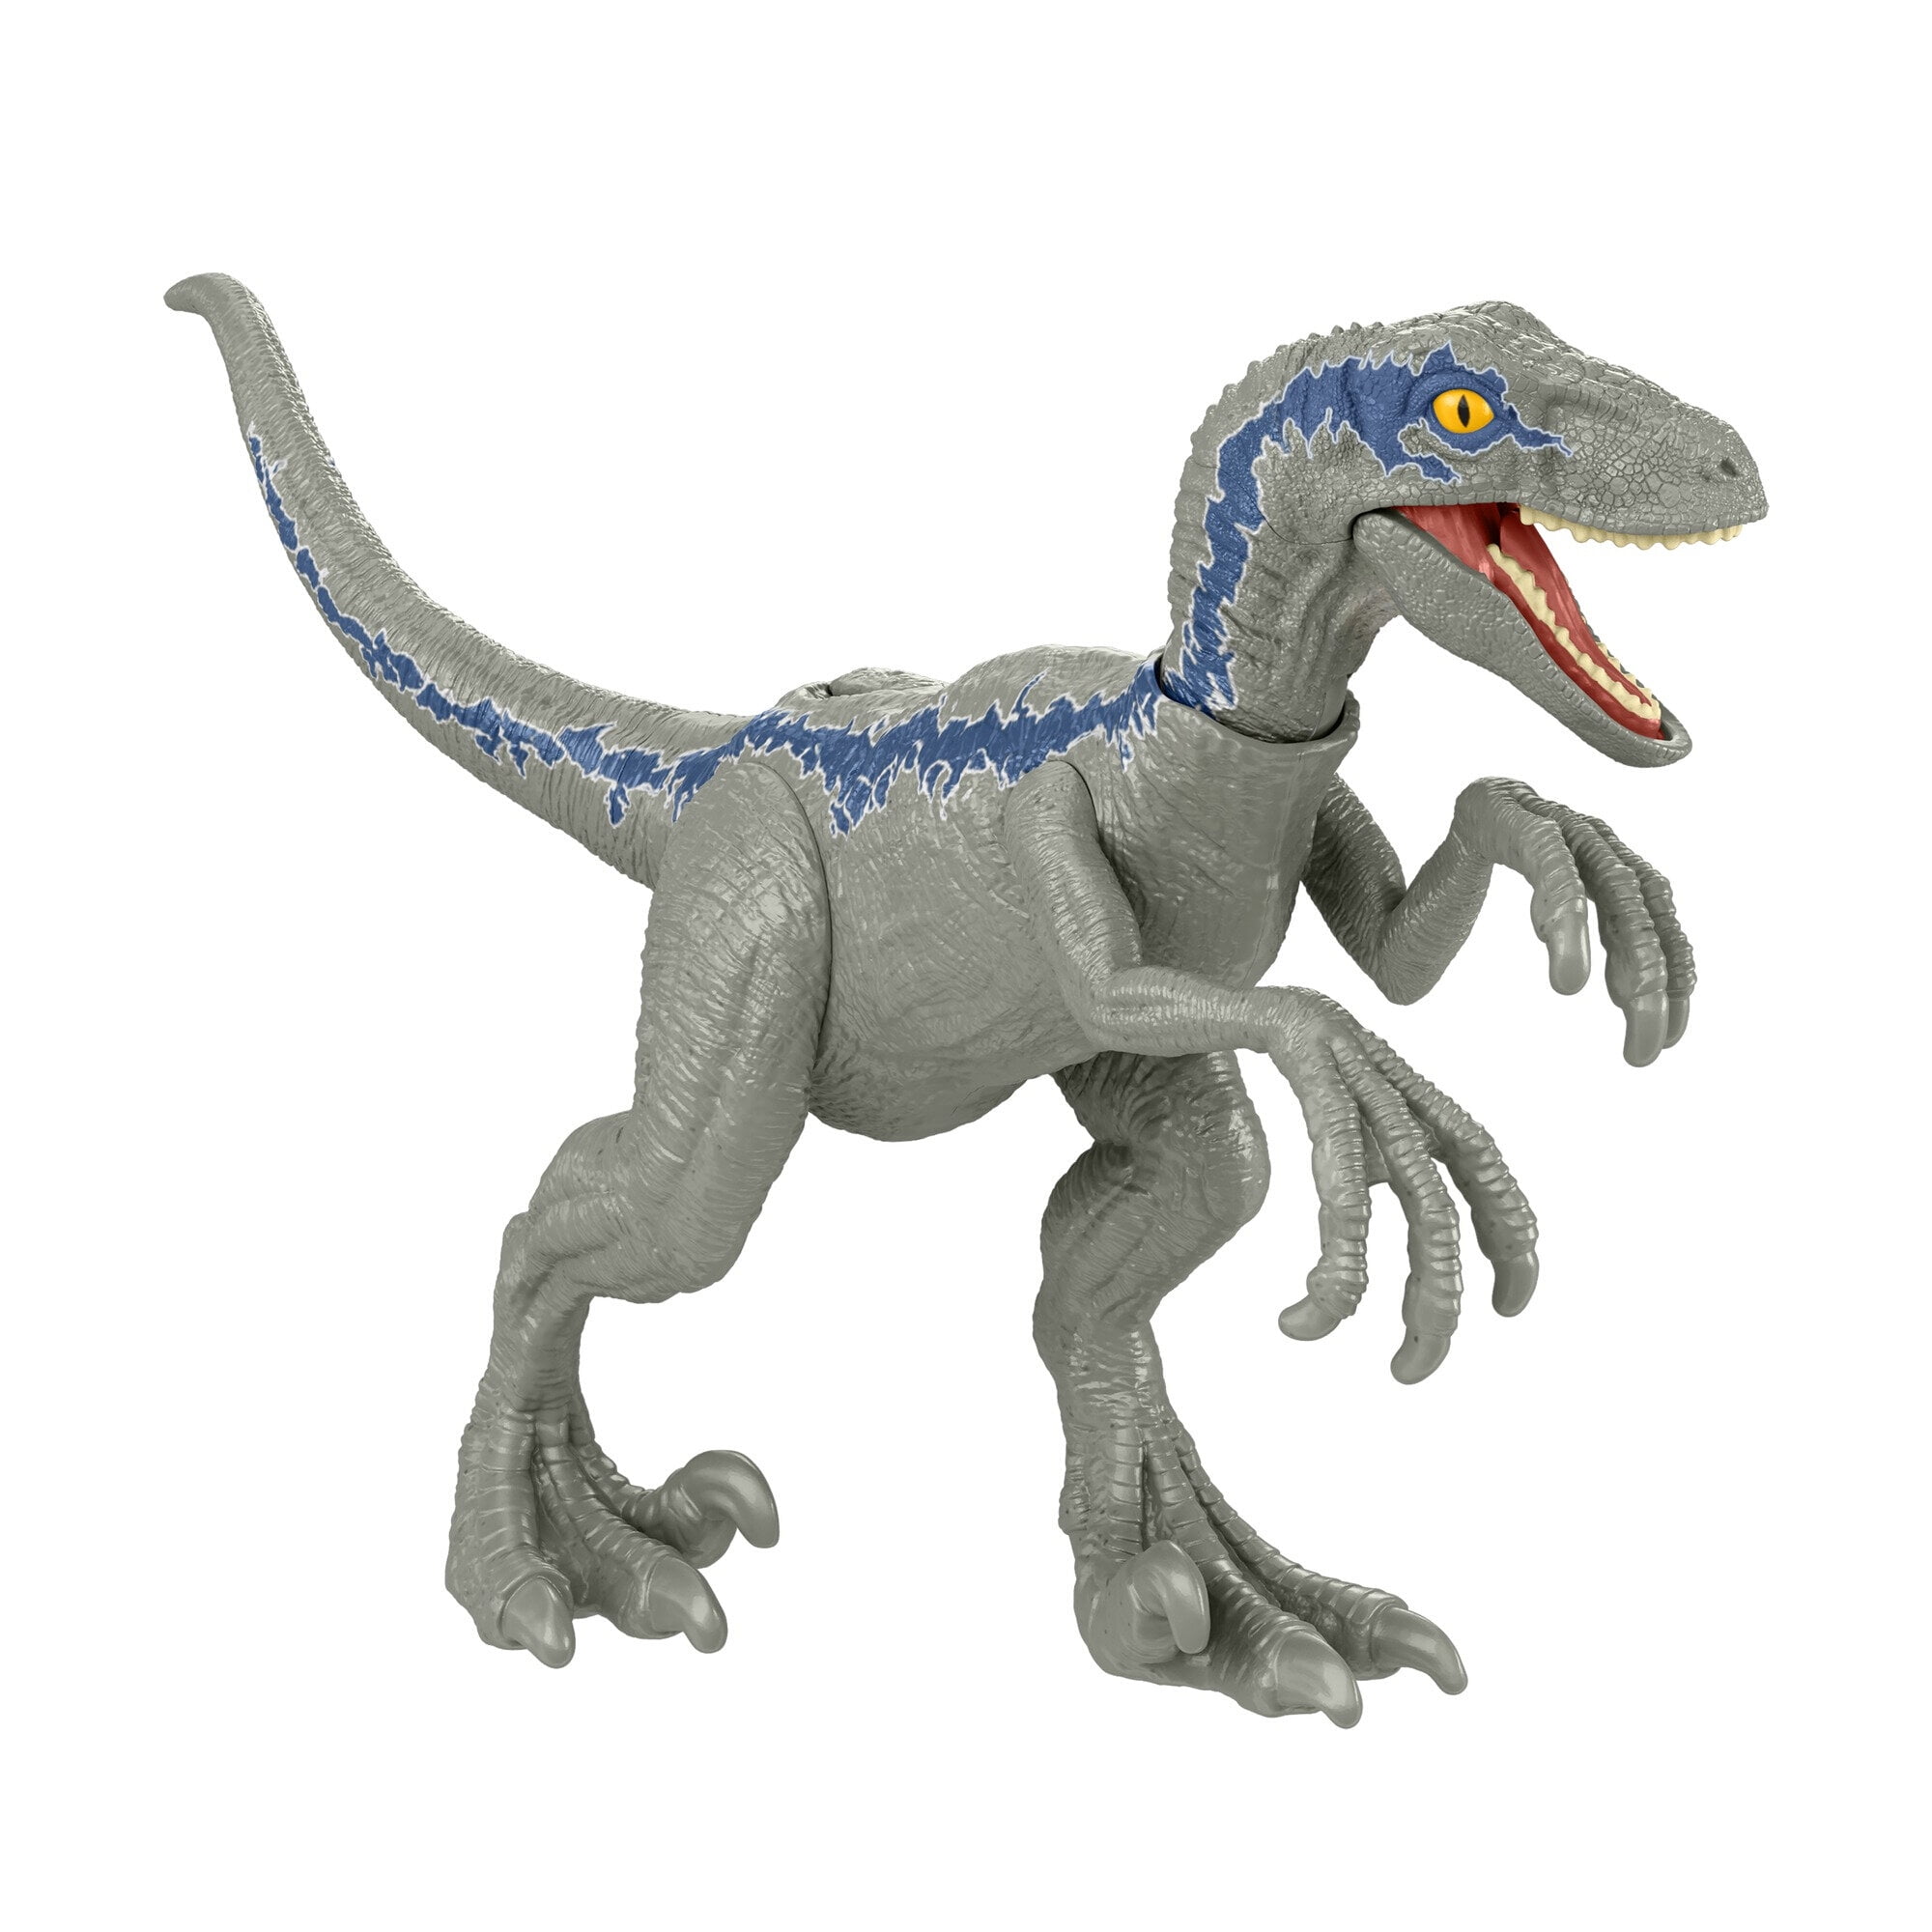 Jurassic Blue Velociraptor Dinosaur Model Toy Home Collector Decor Kids Gift New 